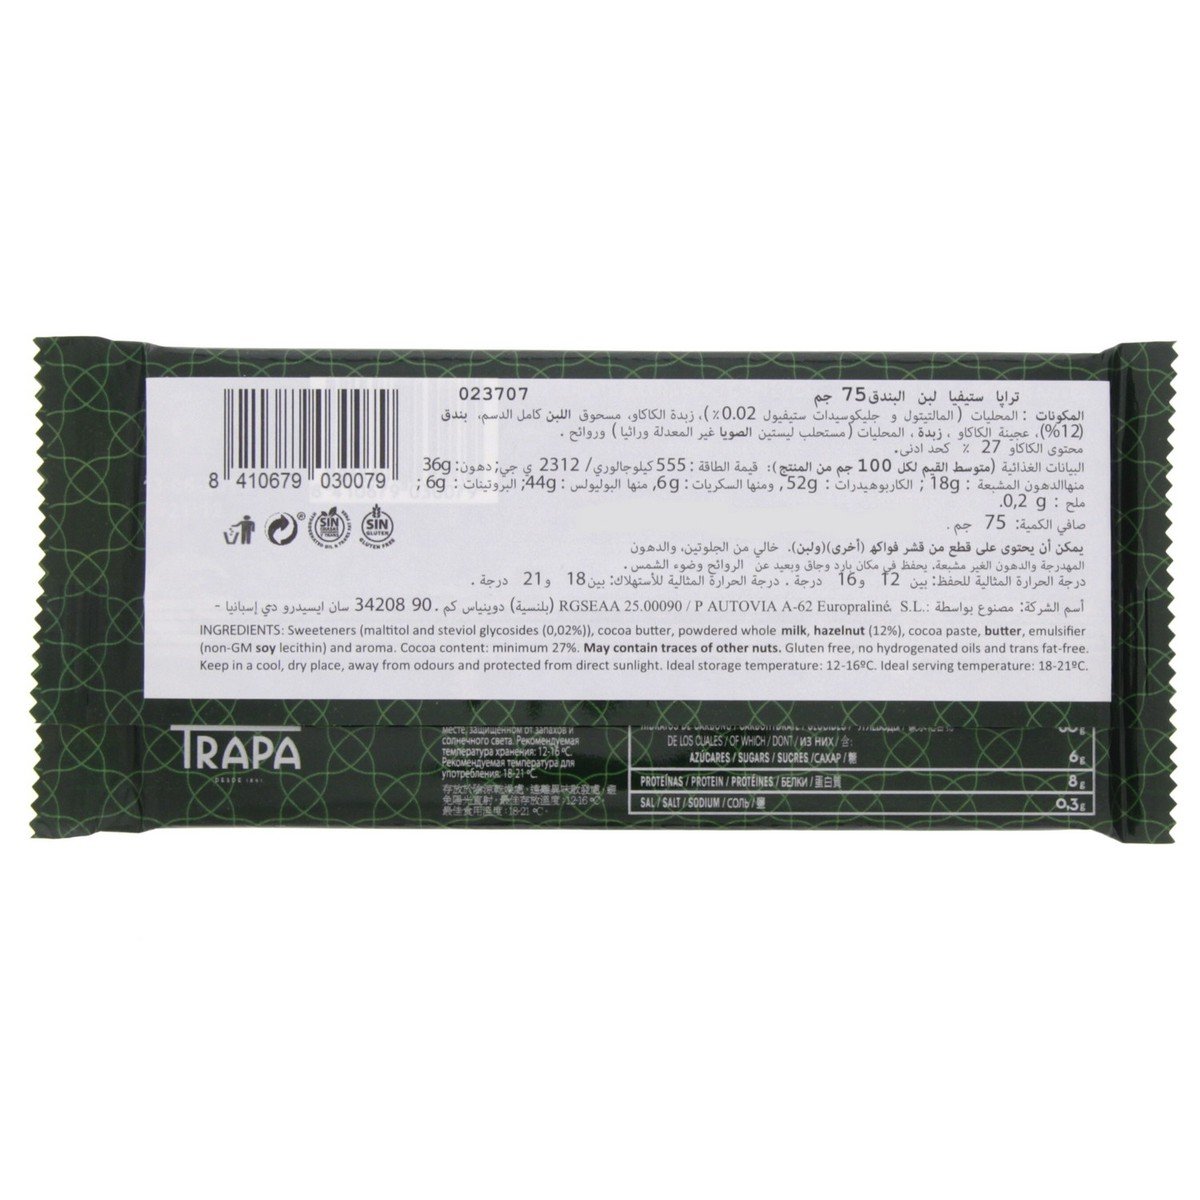 Trapa Stevia Milk & Hazel Nut  Chocolate Bar 75 Gm